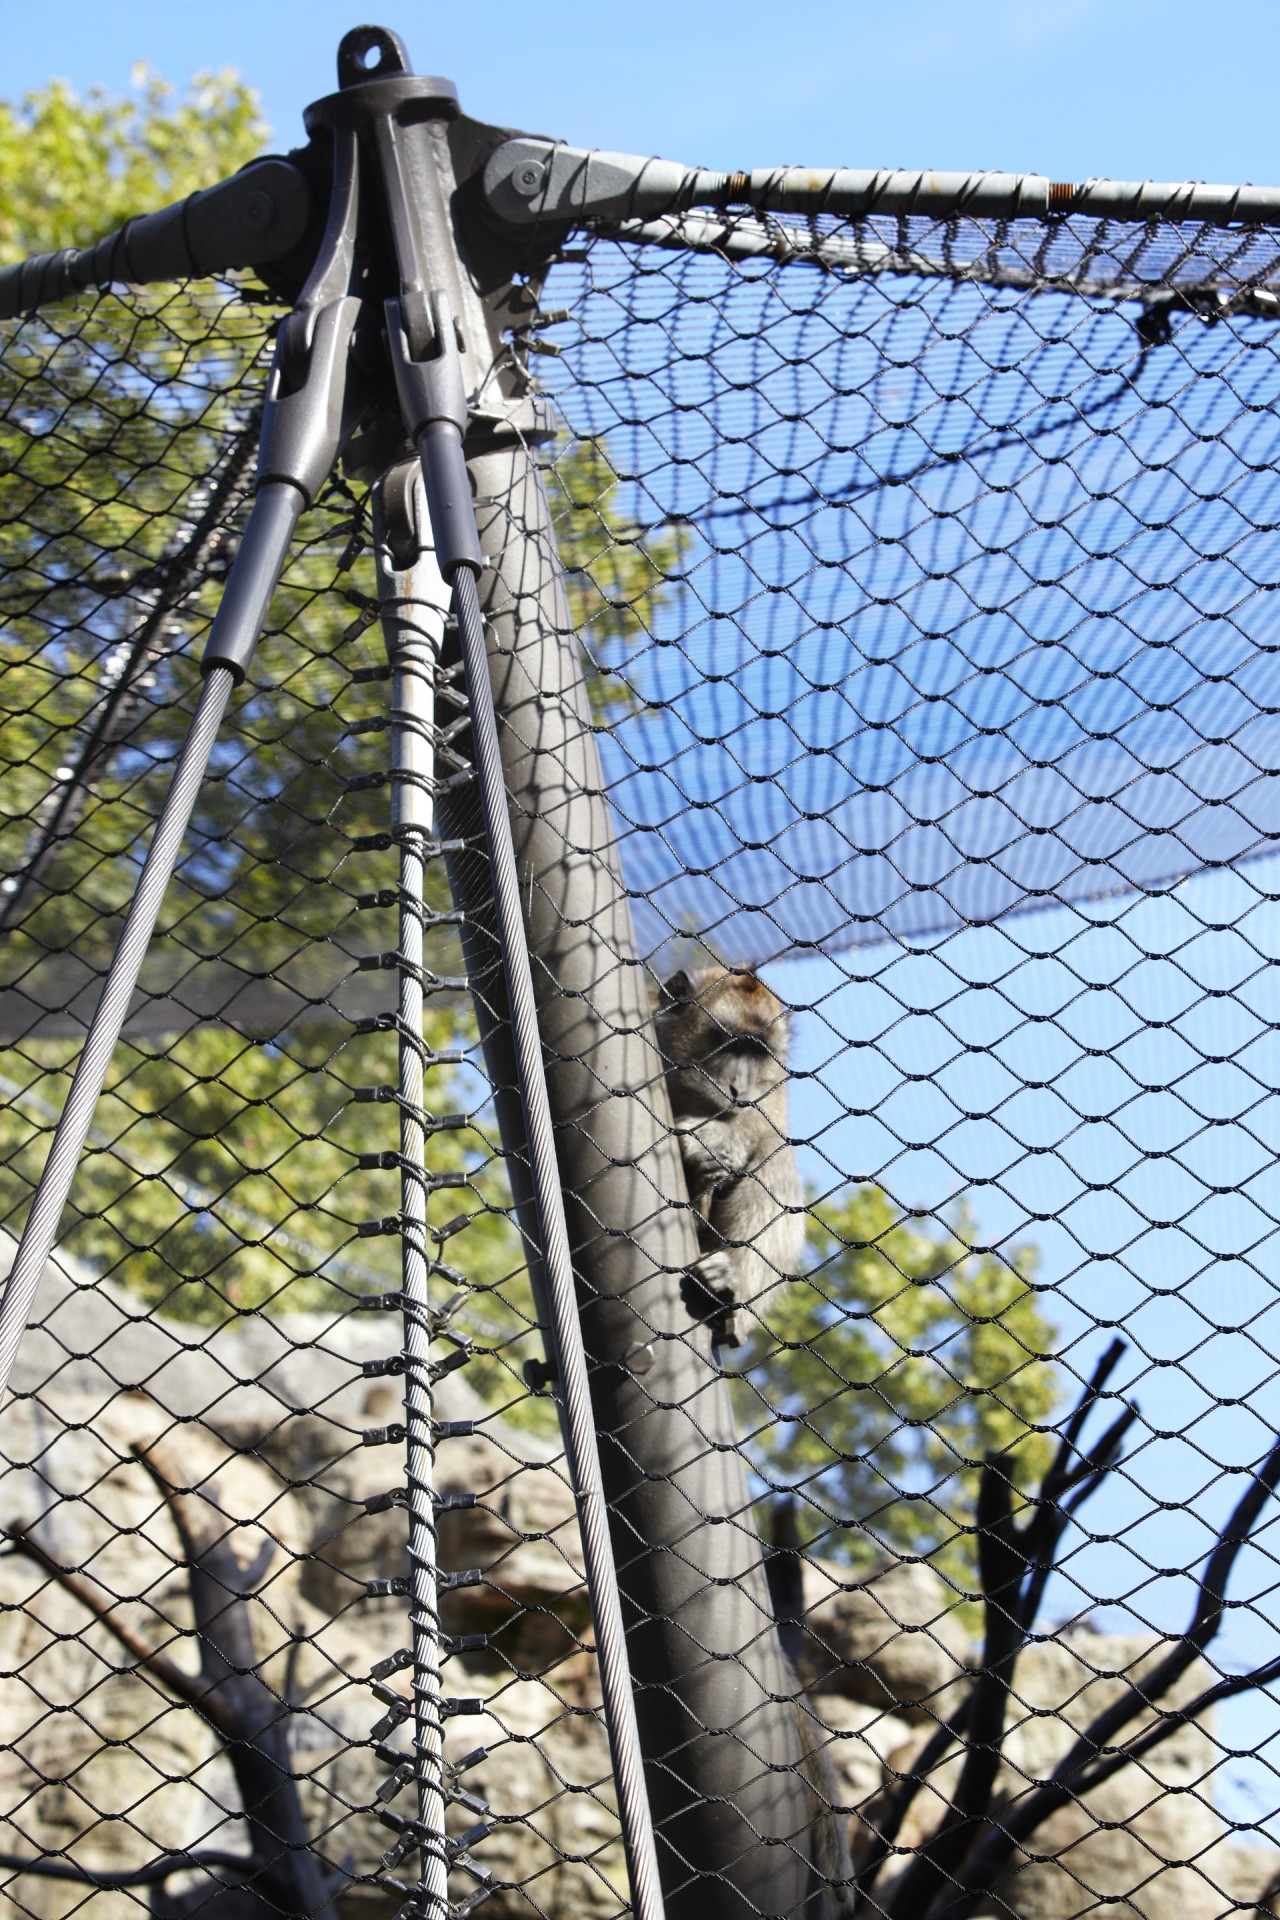 ropes, mesh and poles of an animal enclosure